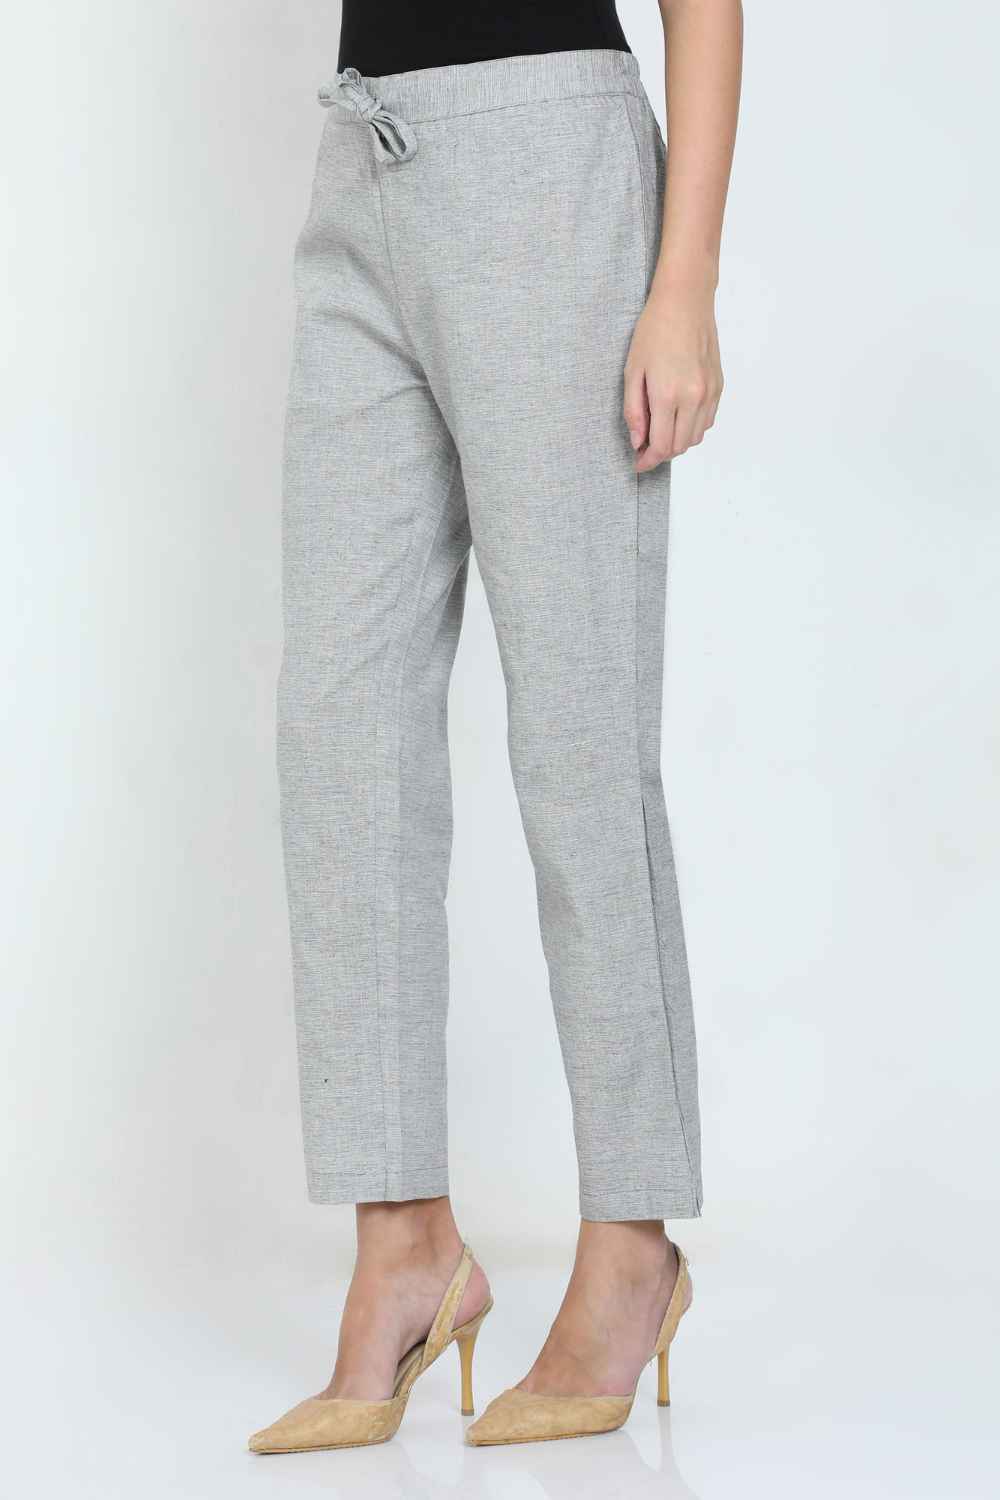 PARK AVENUE Slim Fit Women Grey Trousers - Buy PARK AVENUE Slim Fit Women  Grey Trousers Online at Best Prices in India | Flipkart.com